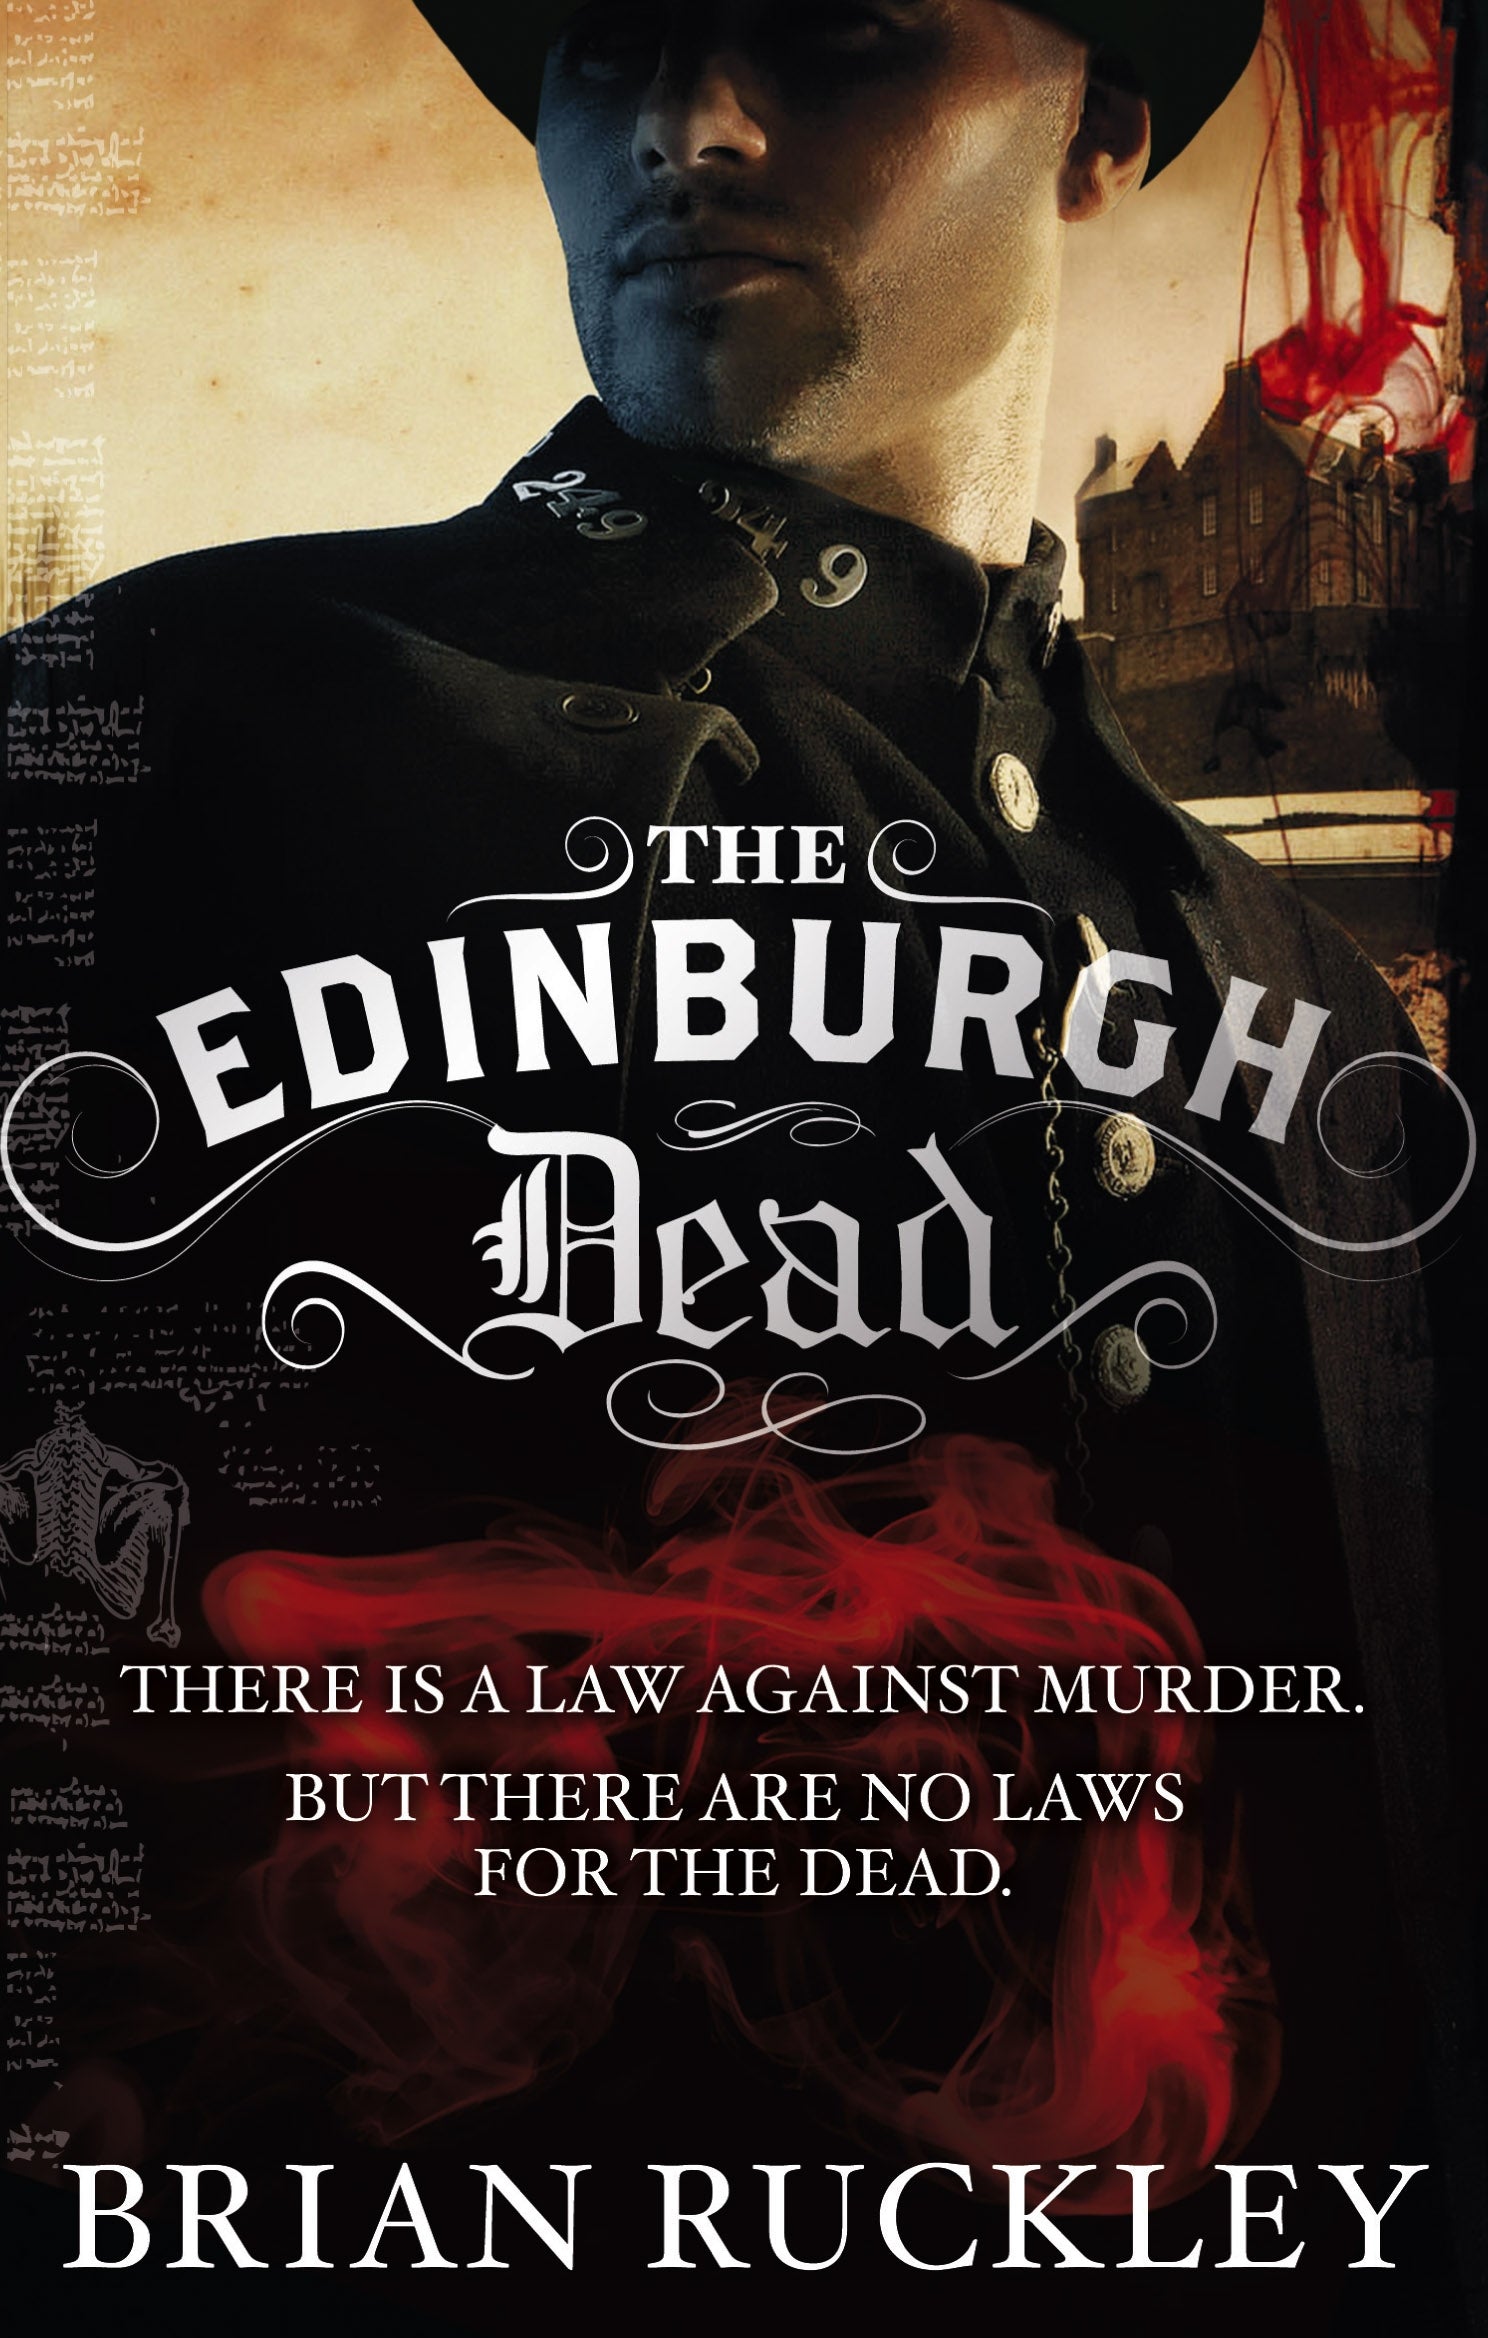 The Edinburgh Dead by Brian Ruckley